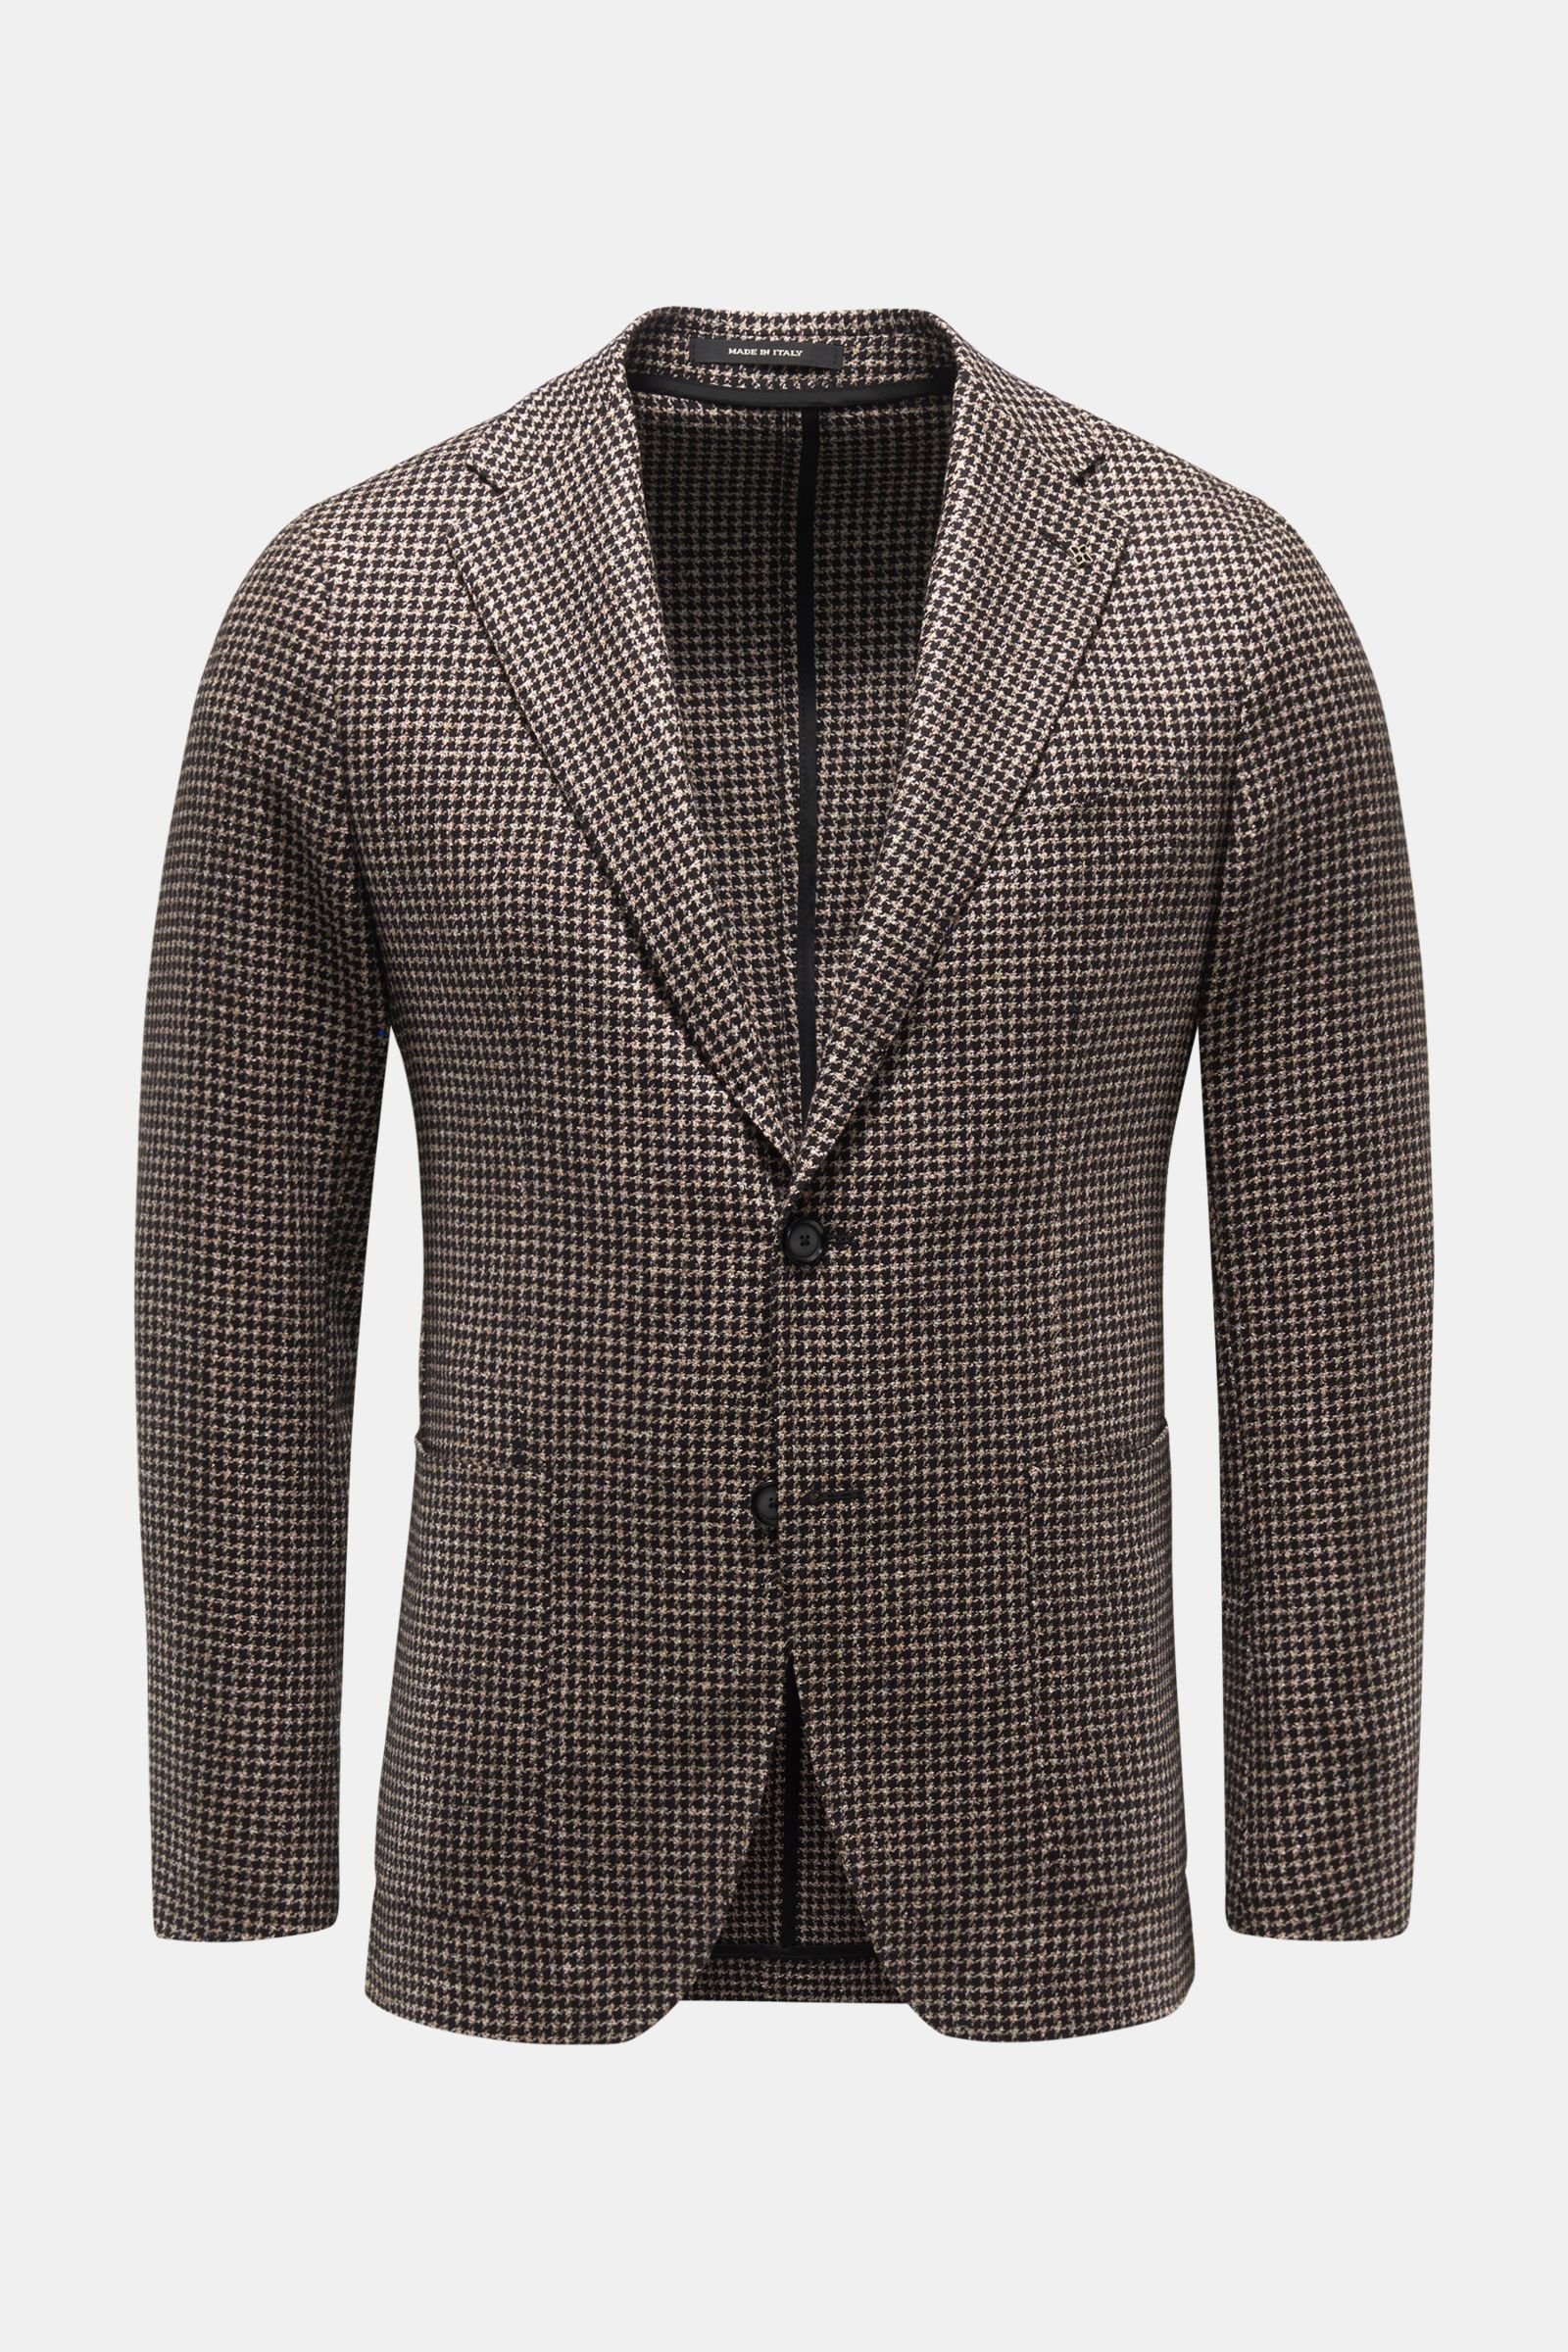 Smart-casual jacket 'Dakar' grey-brown/black checked